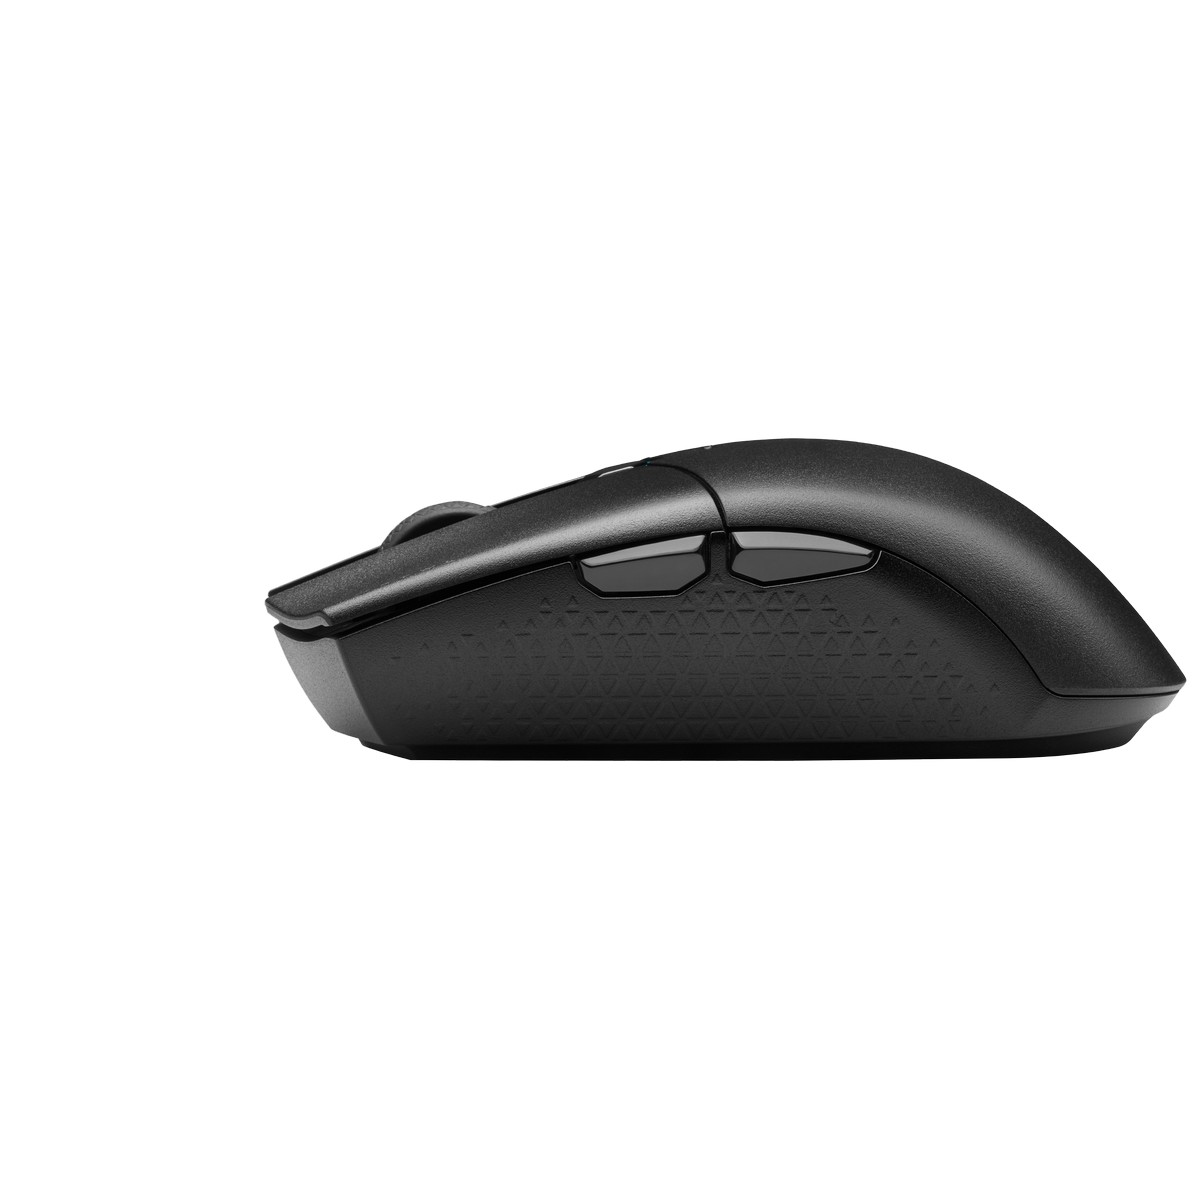 CORSAIR - CORSAIR KATAR PRO WIRELESS Optical Lightweight Gaming Mouse